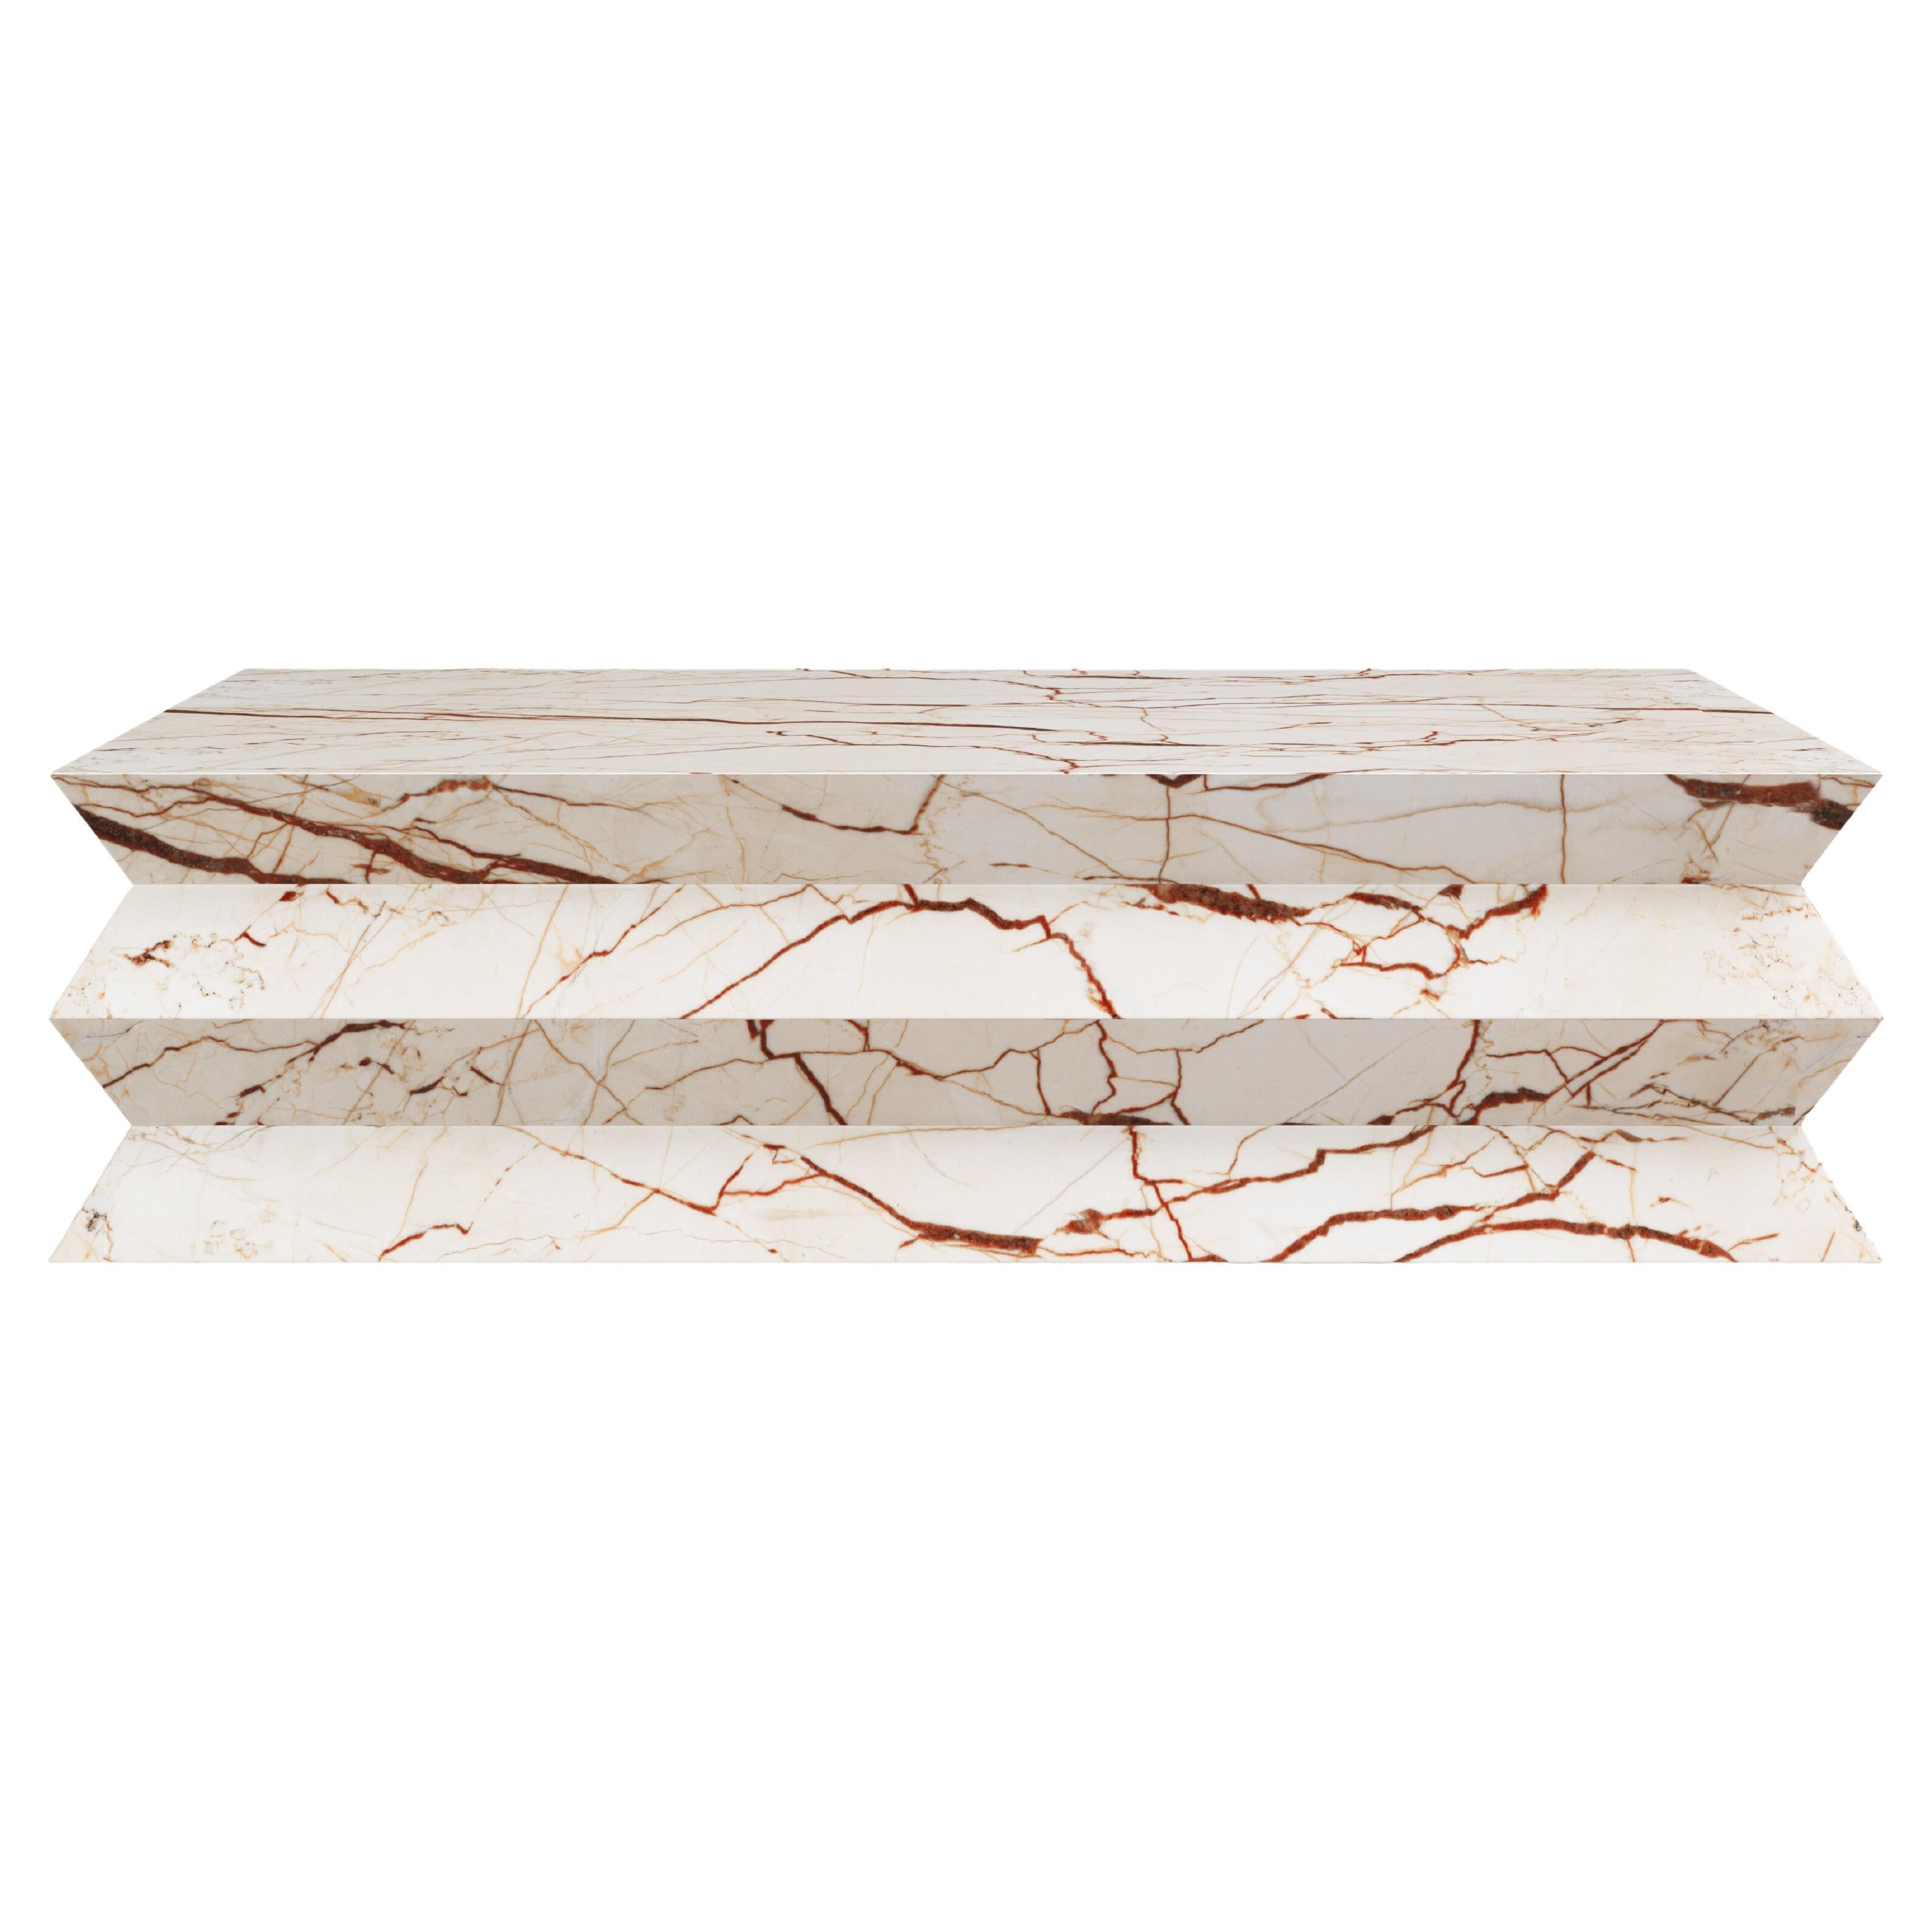 FORM(LA) Grinza table basse rectangulaire 60 po. (L) x 36 po. (L) x 16 po. (H) Sofita marbre beige en vente